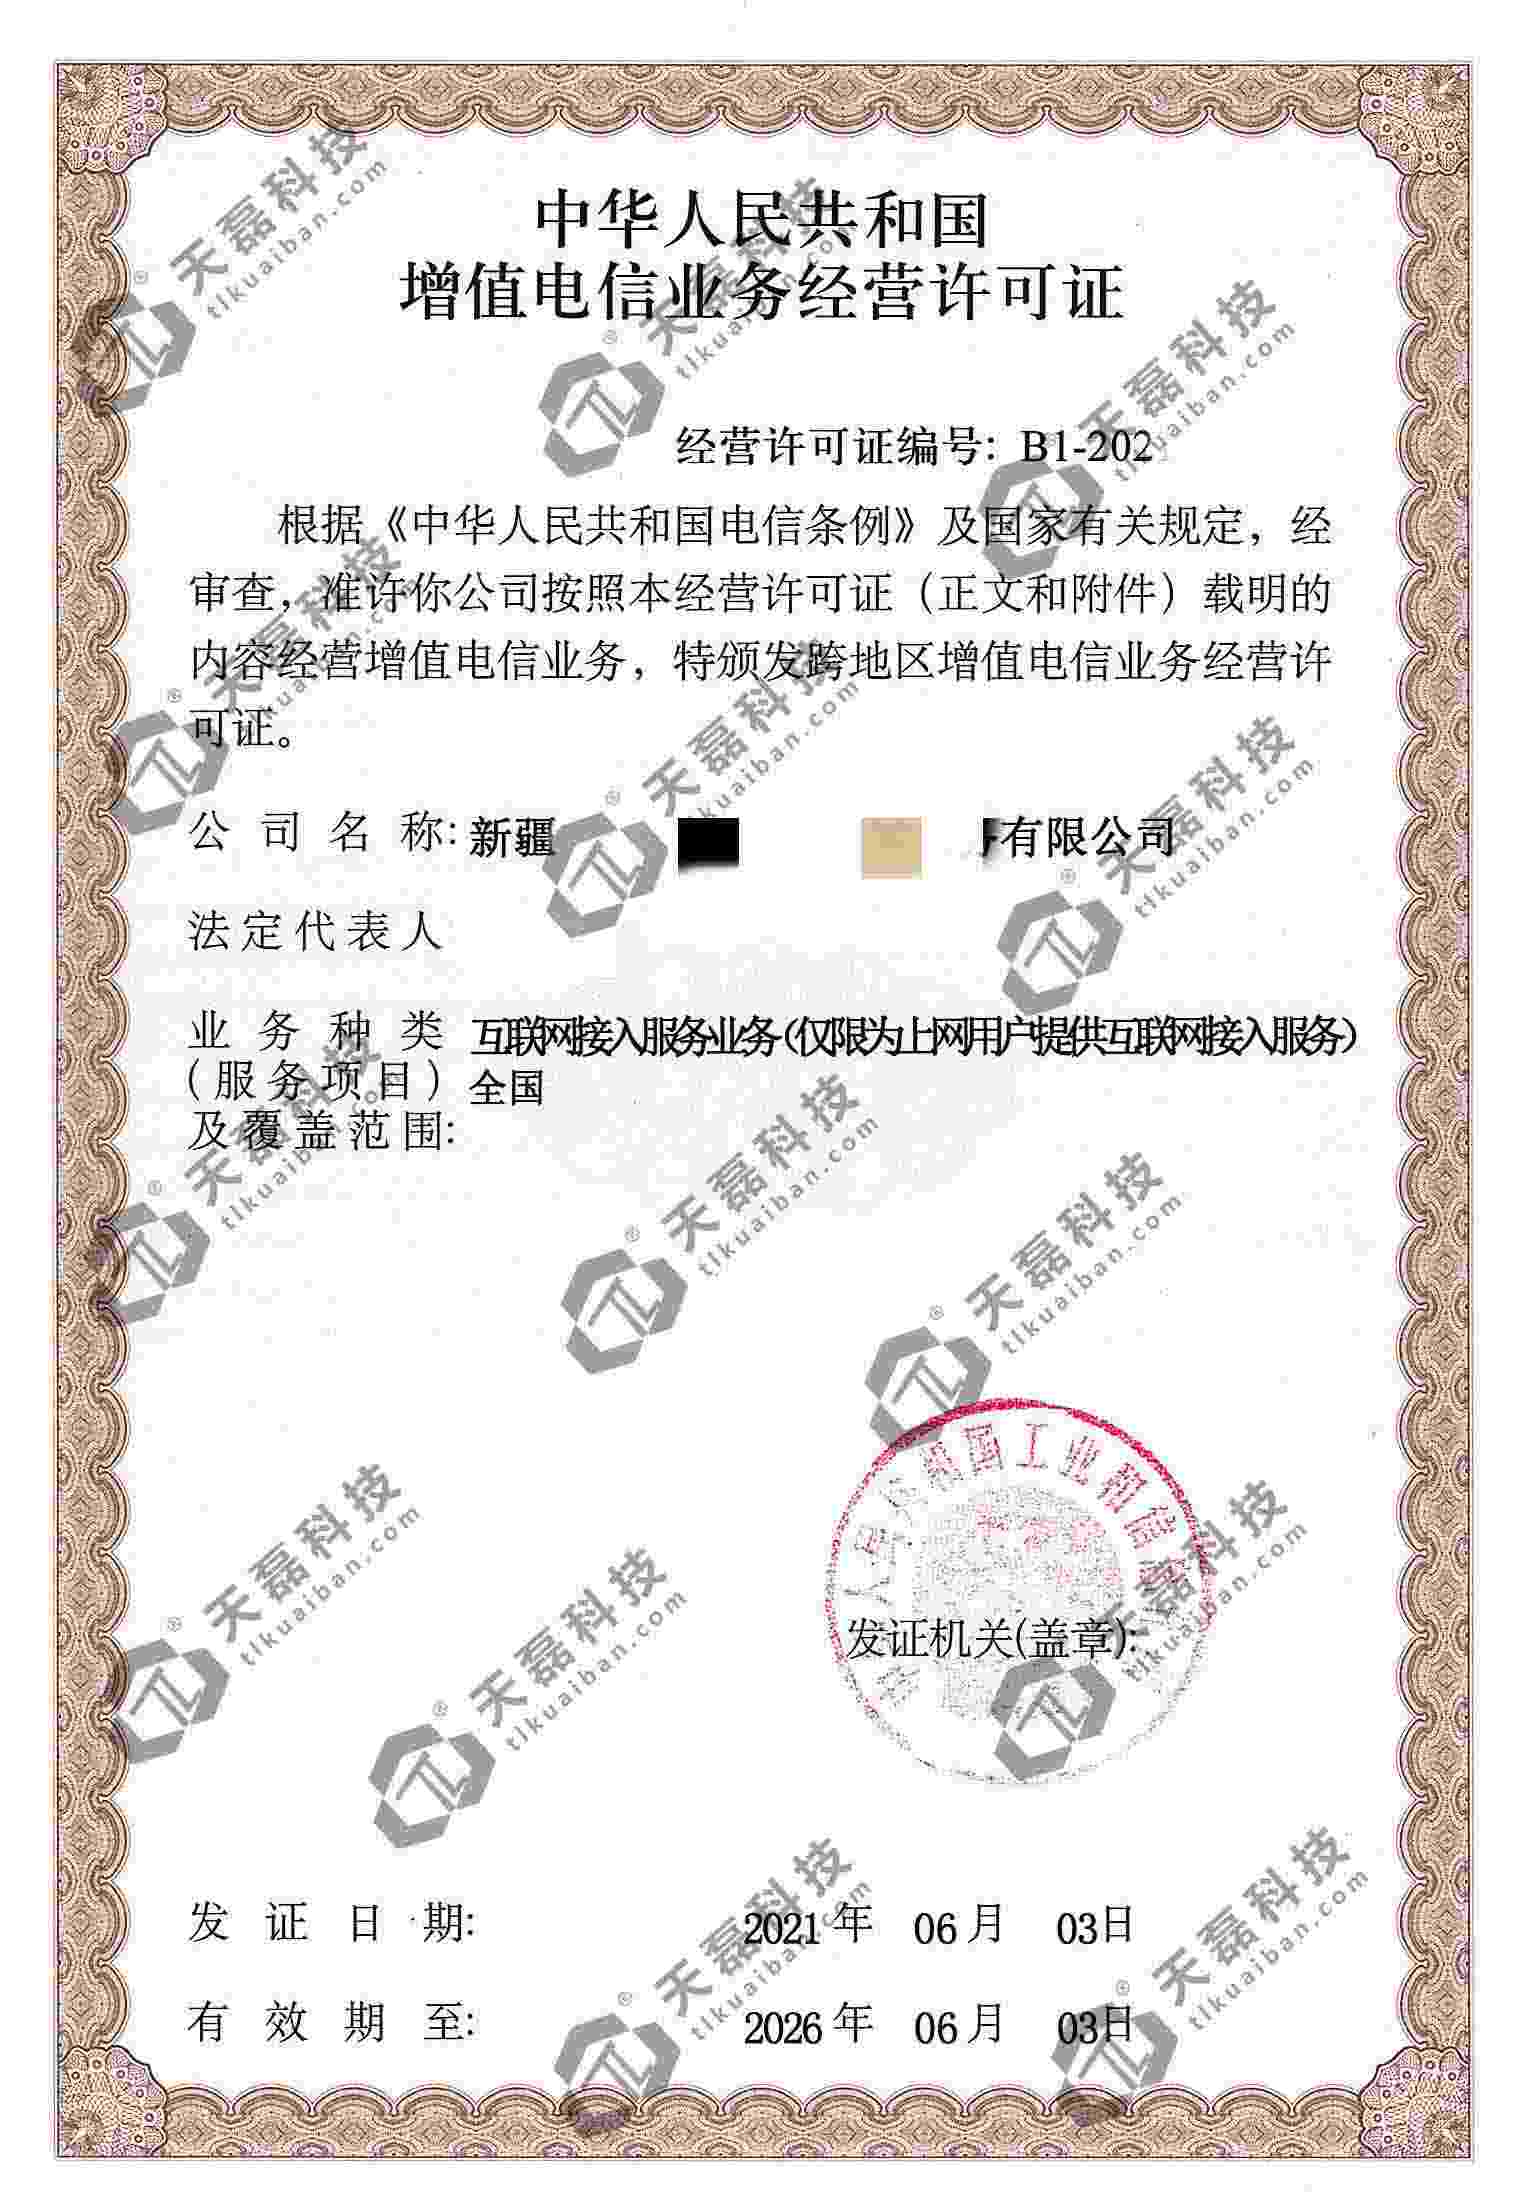 2021年上海ISP经营许可证